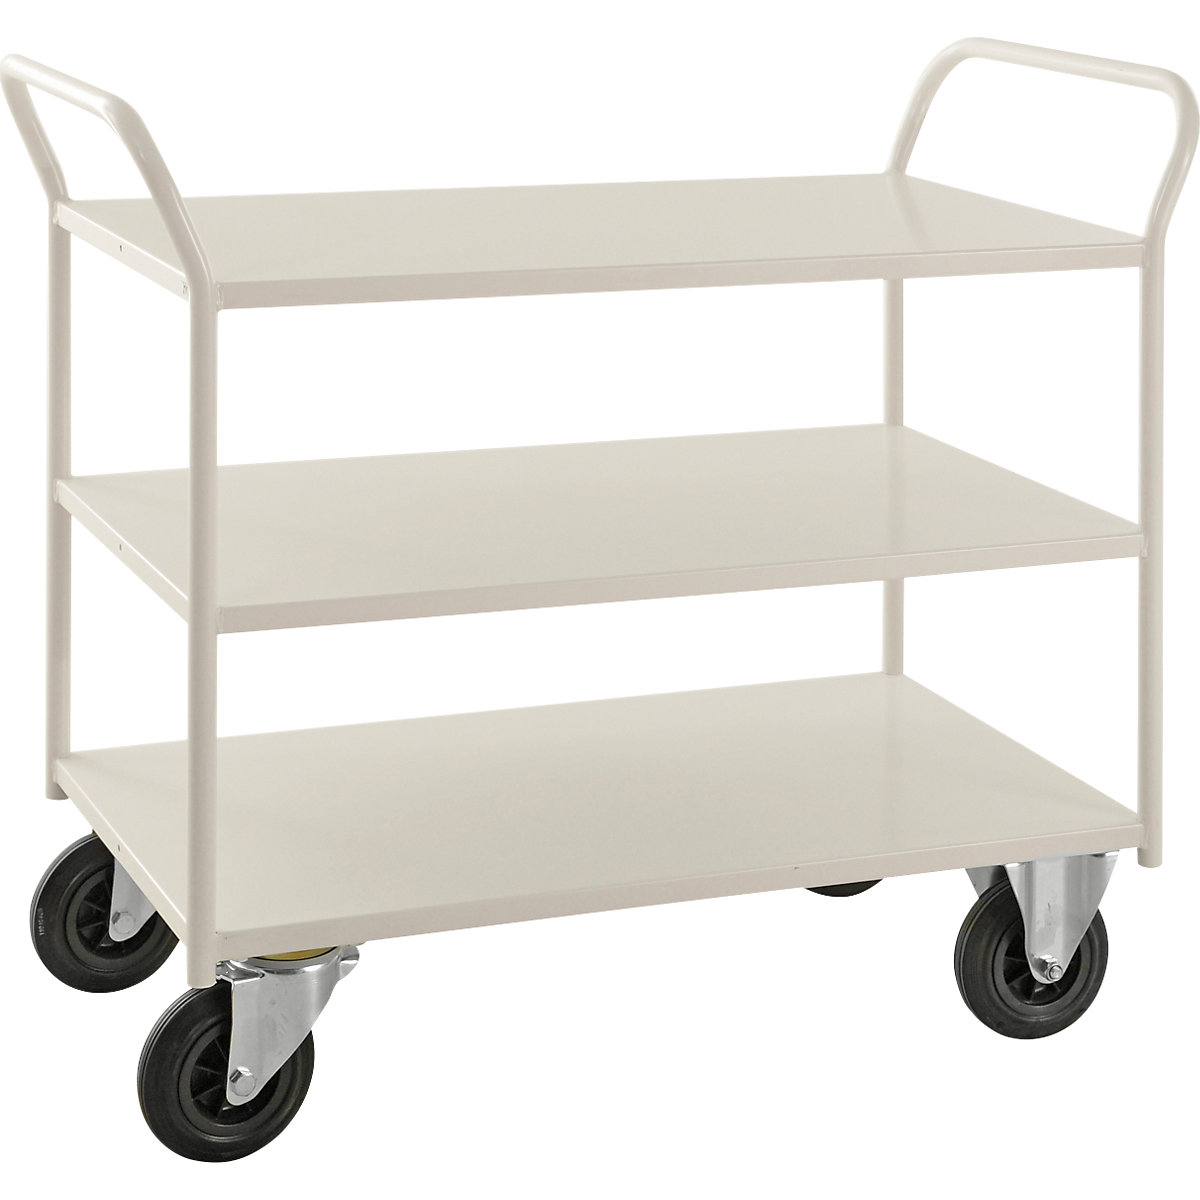 KM41 table trolley – Kongamek, 3 shelves, LxWxH 1070 x 550 x 975 mm, white, 2 swivel castors and 2 fixed castors, 5+ items-2